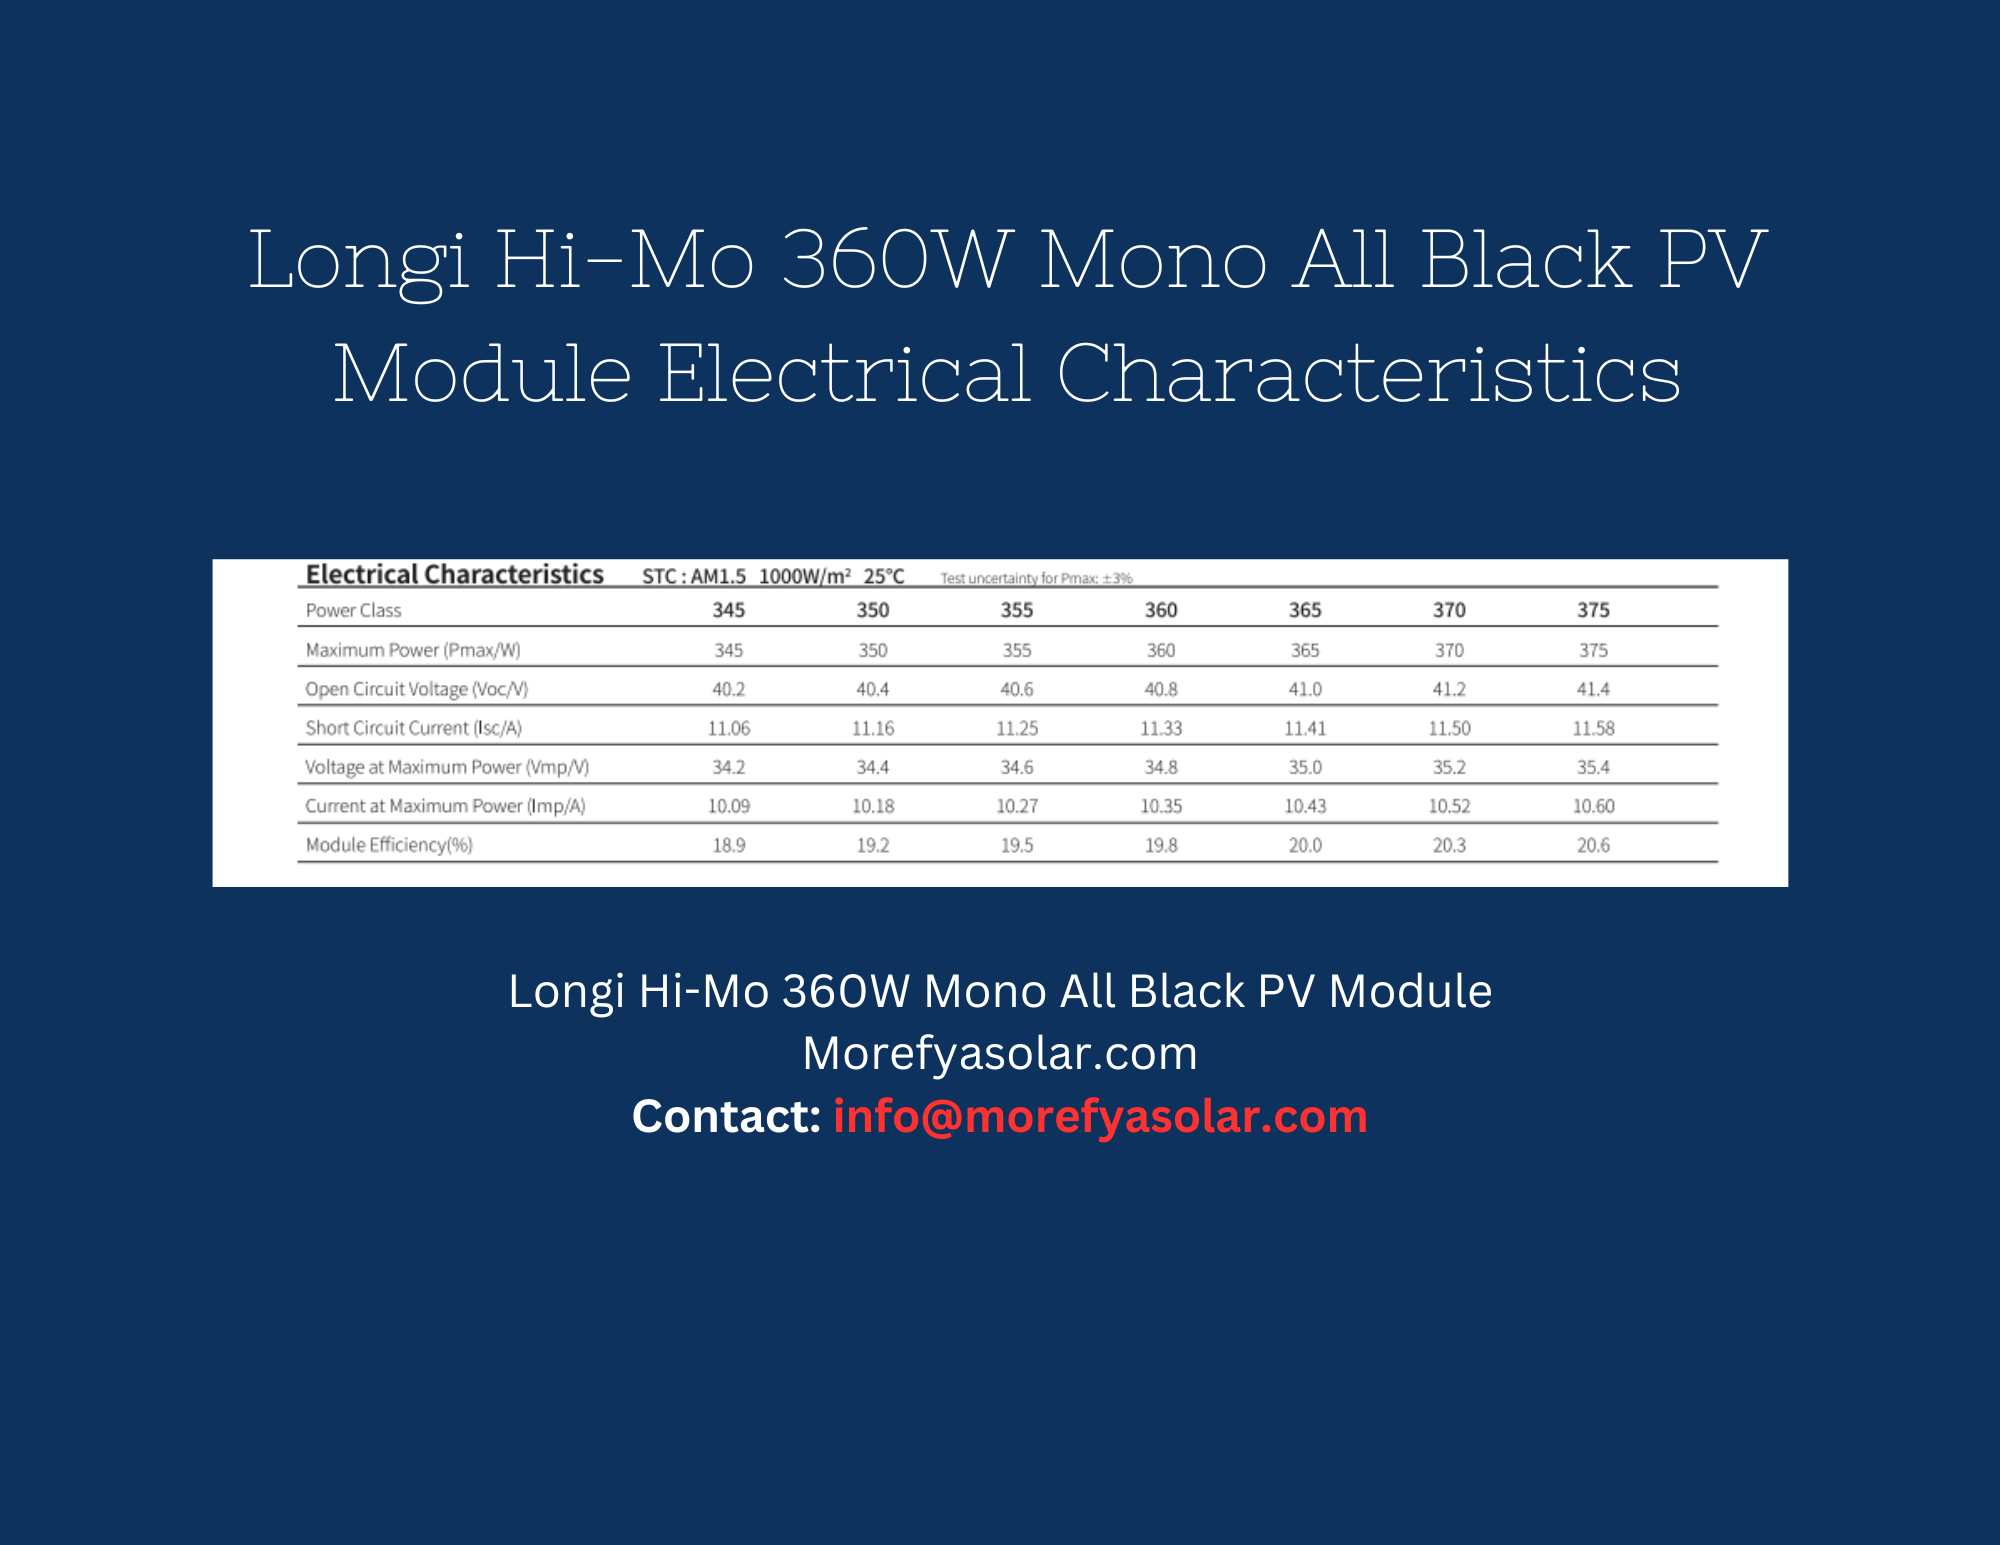 Longi Hi-MO 360W Mono Bifacial All Black PV Modules